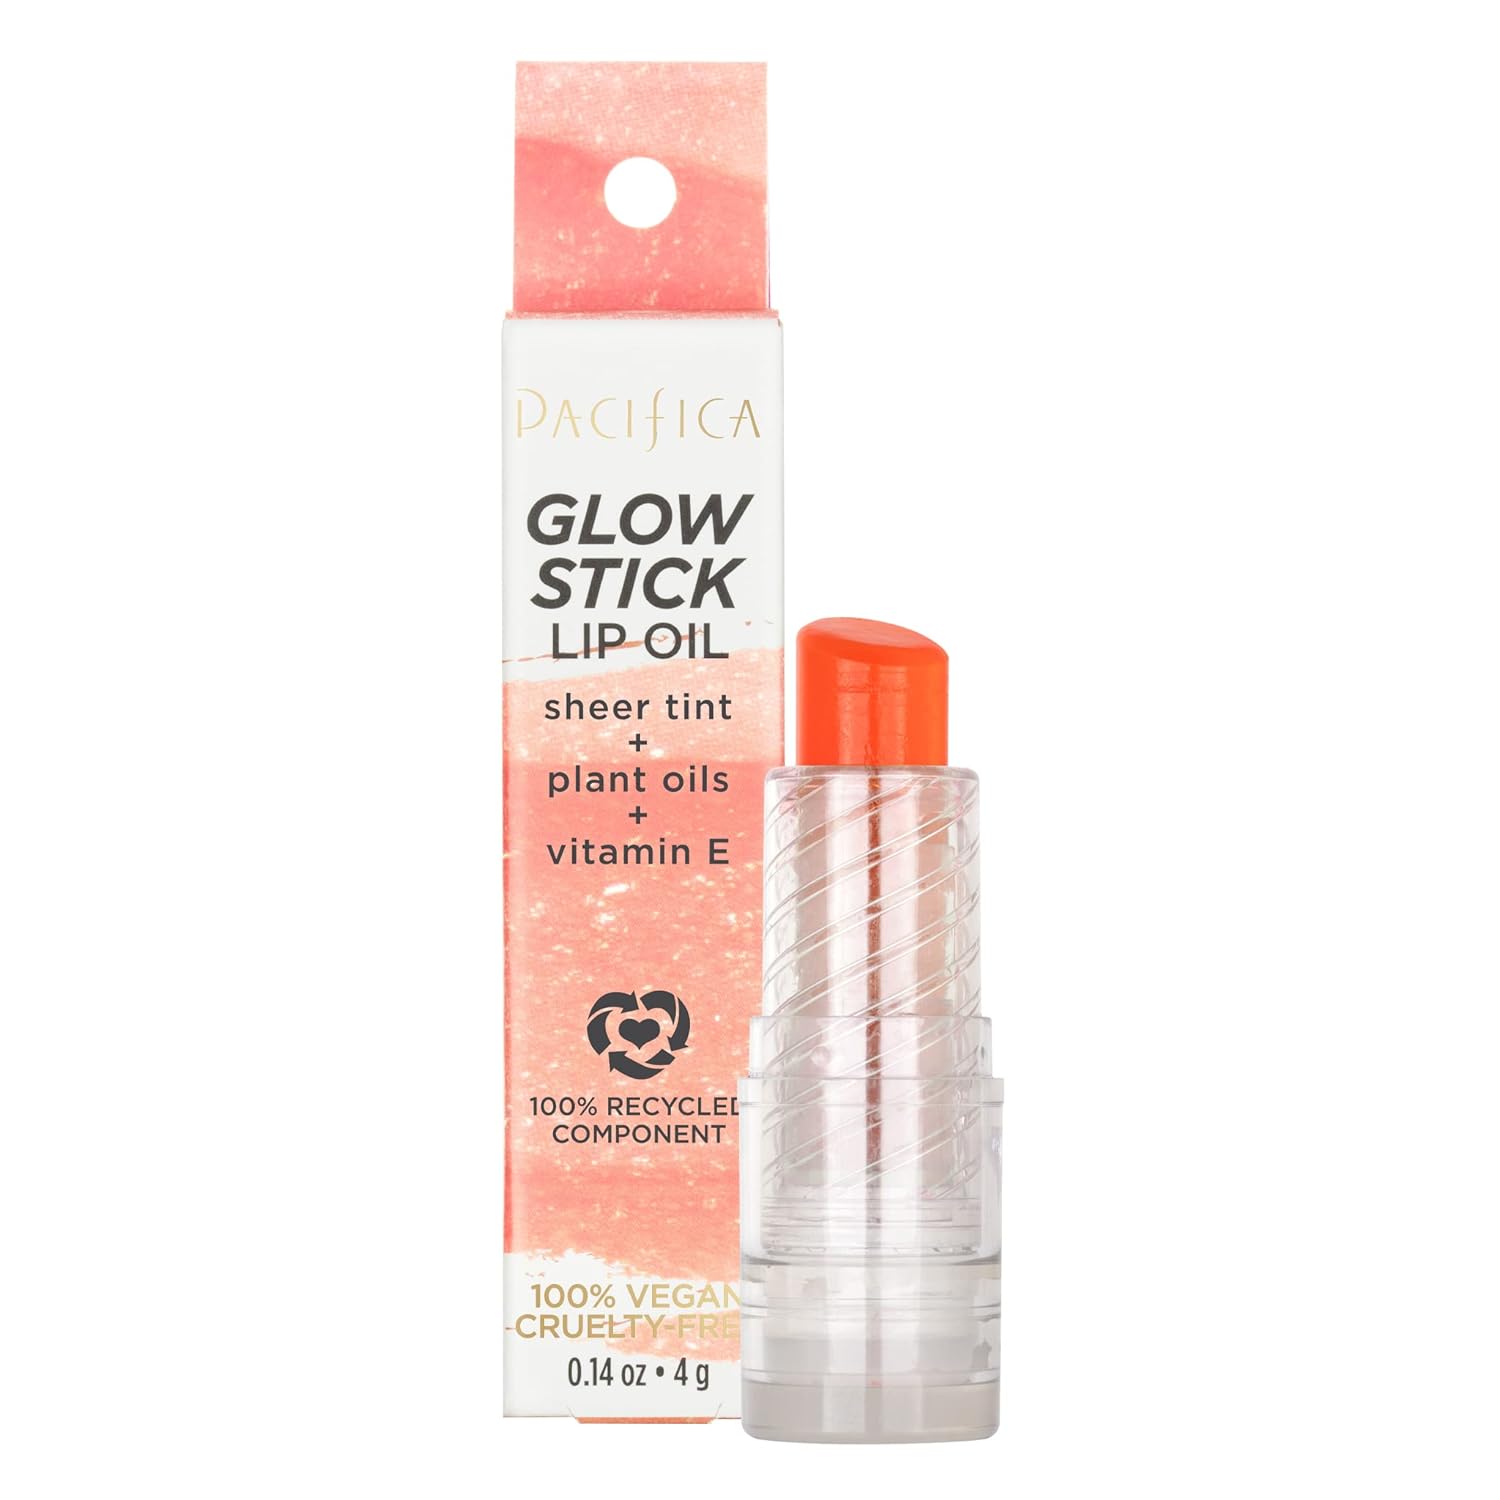 Pacifica Glow Stick Lip Oil - Pale Sunset Women 0.14 oz